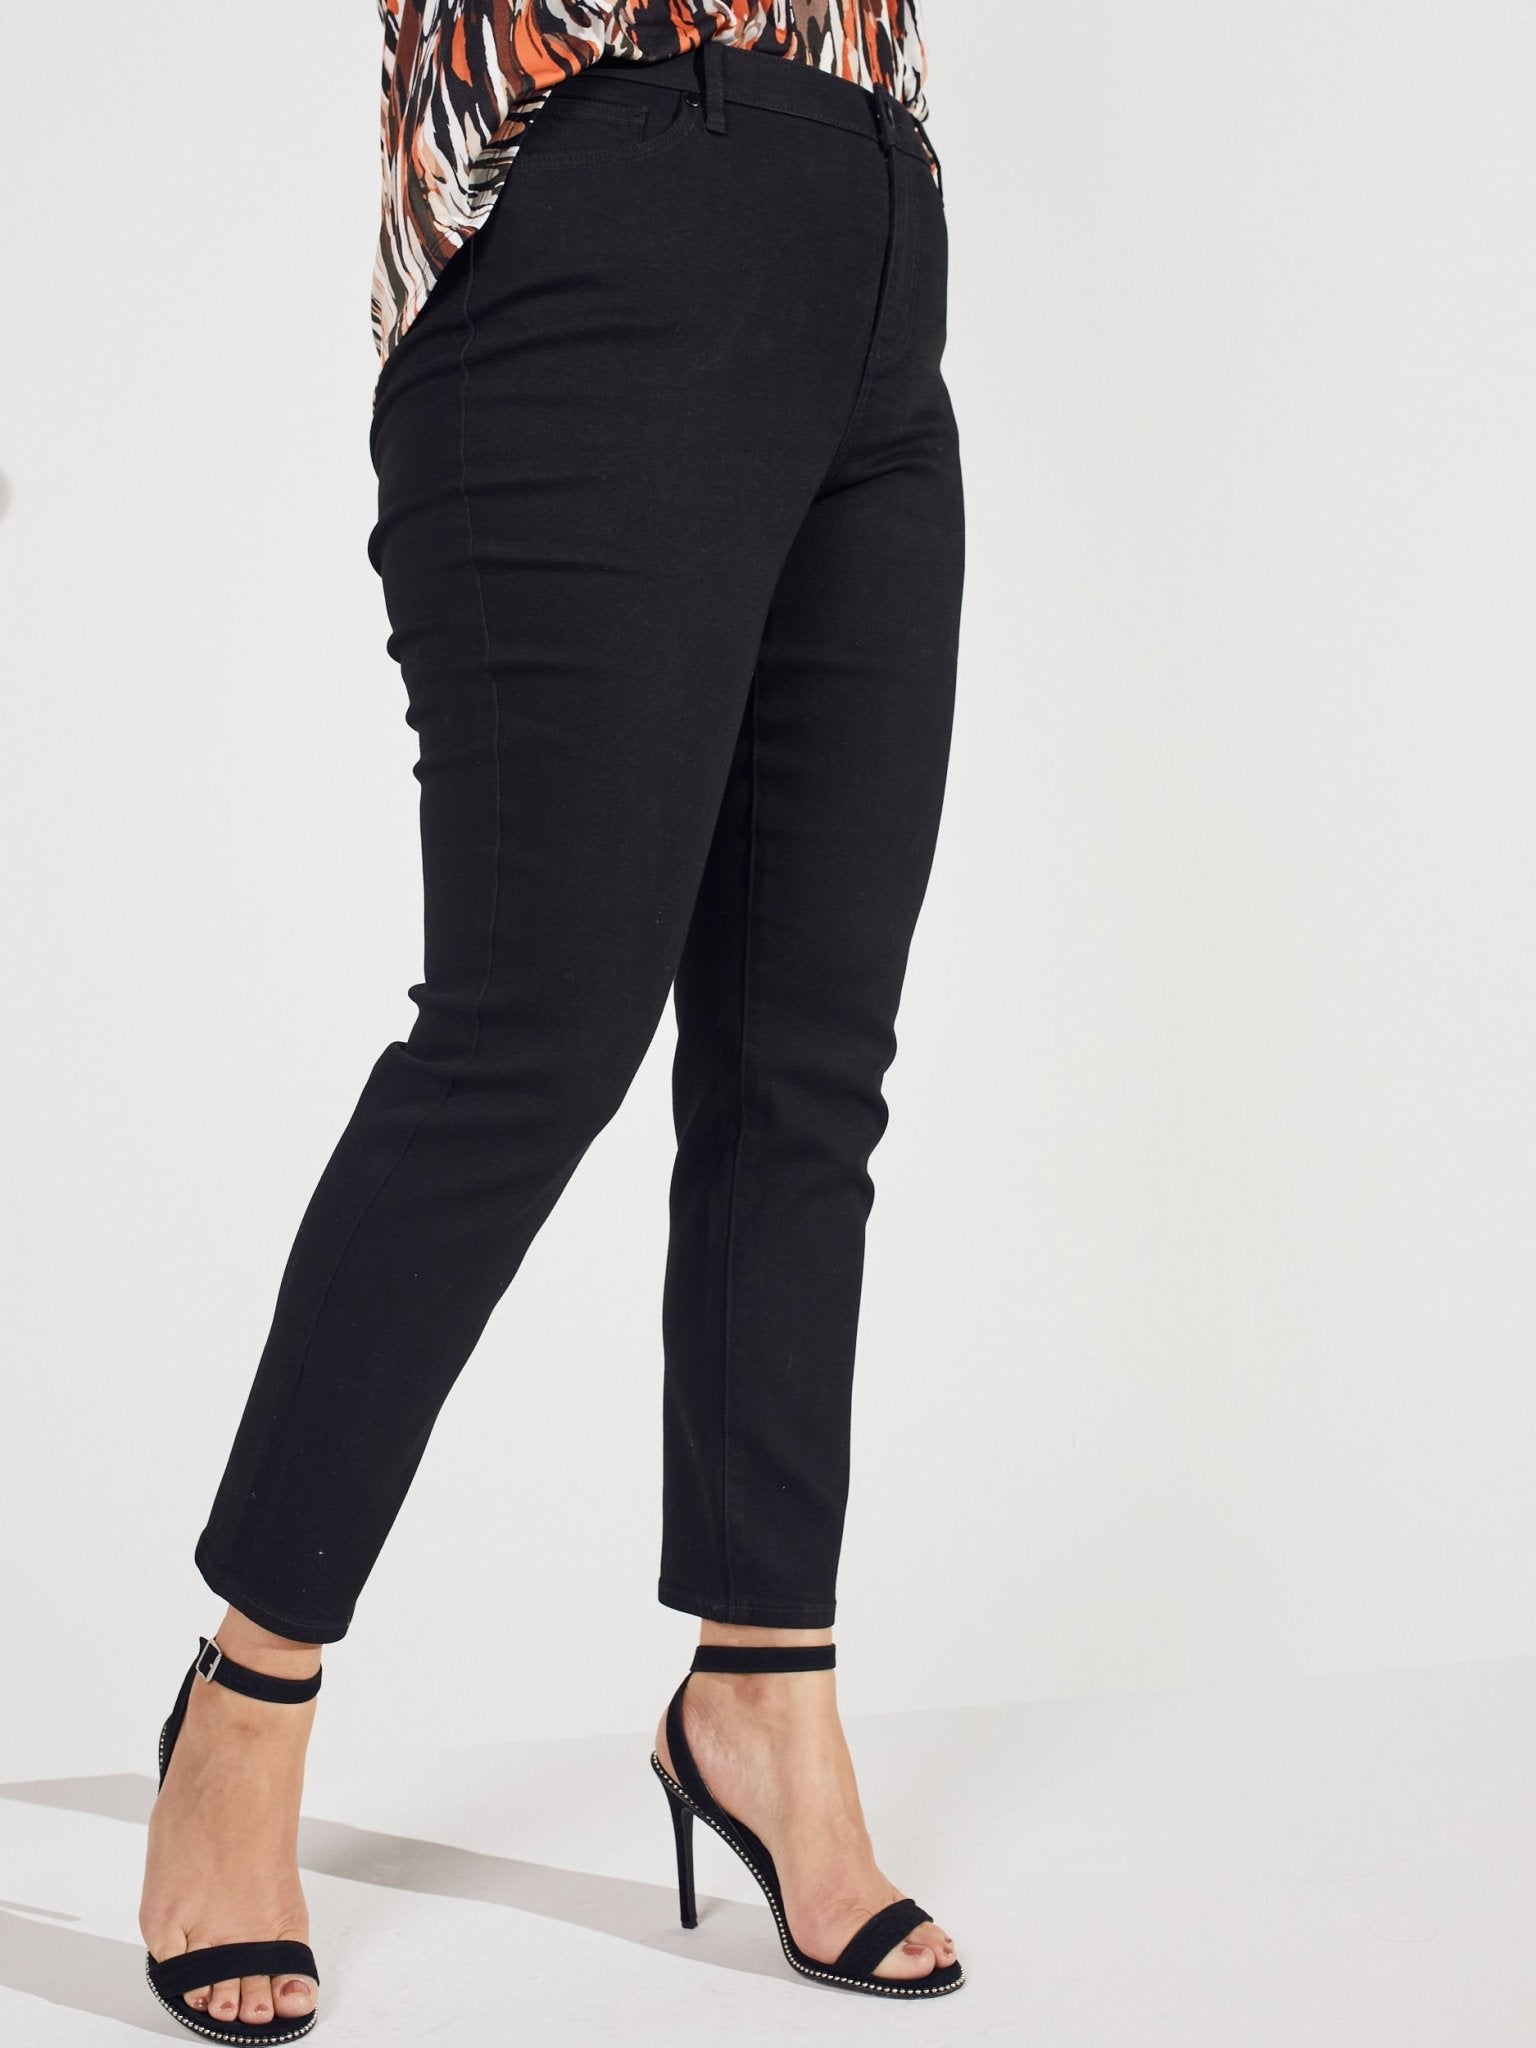 Signature Skinny 5 Pocket Denim Jean - Plus - DressbarnClothing